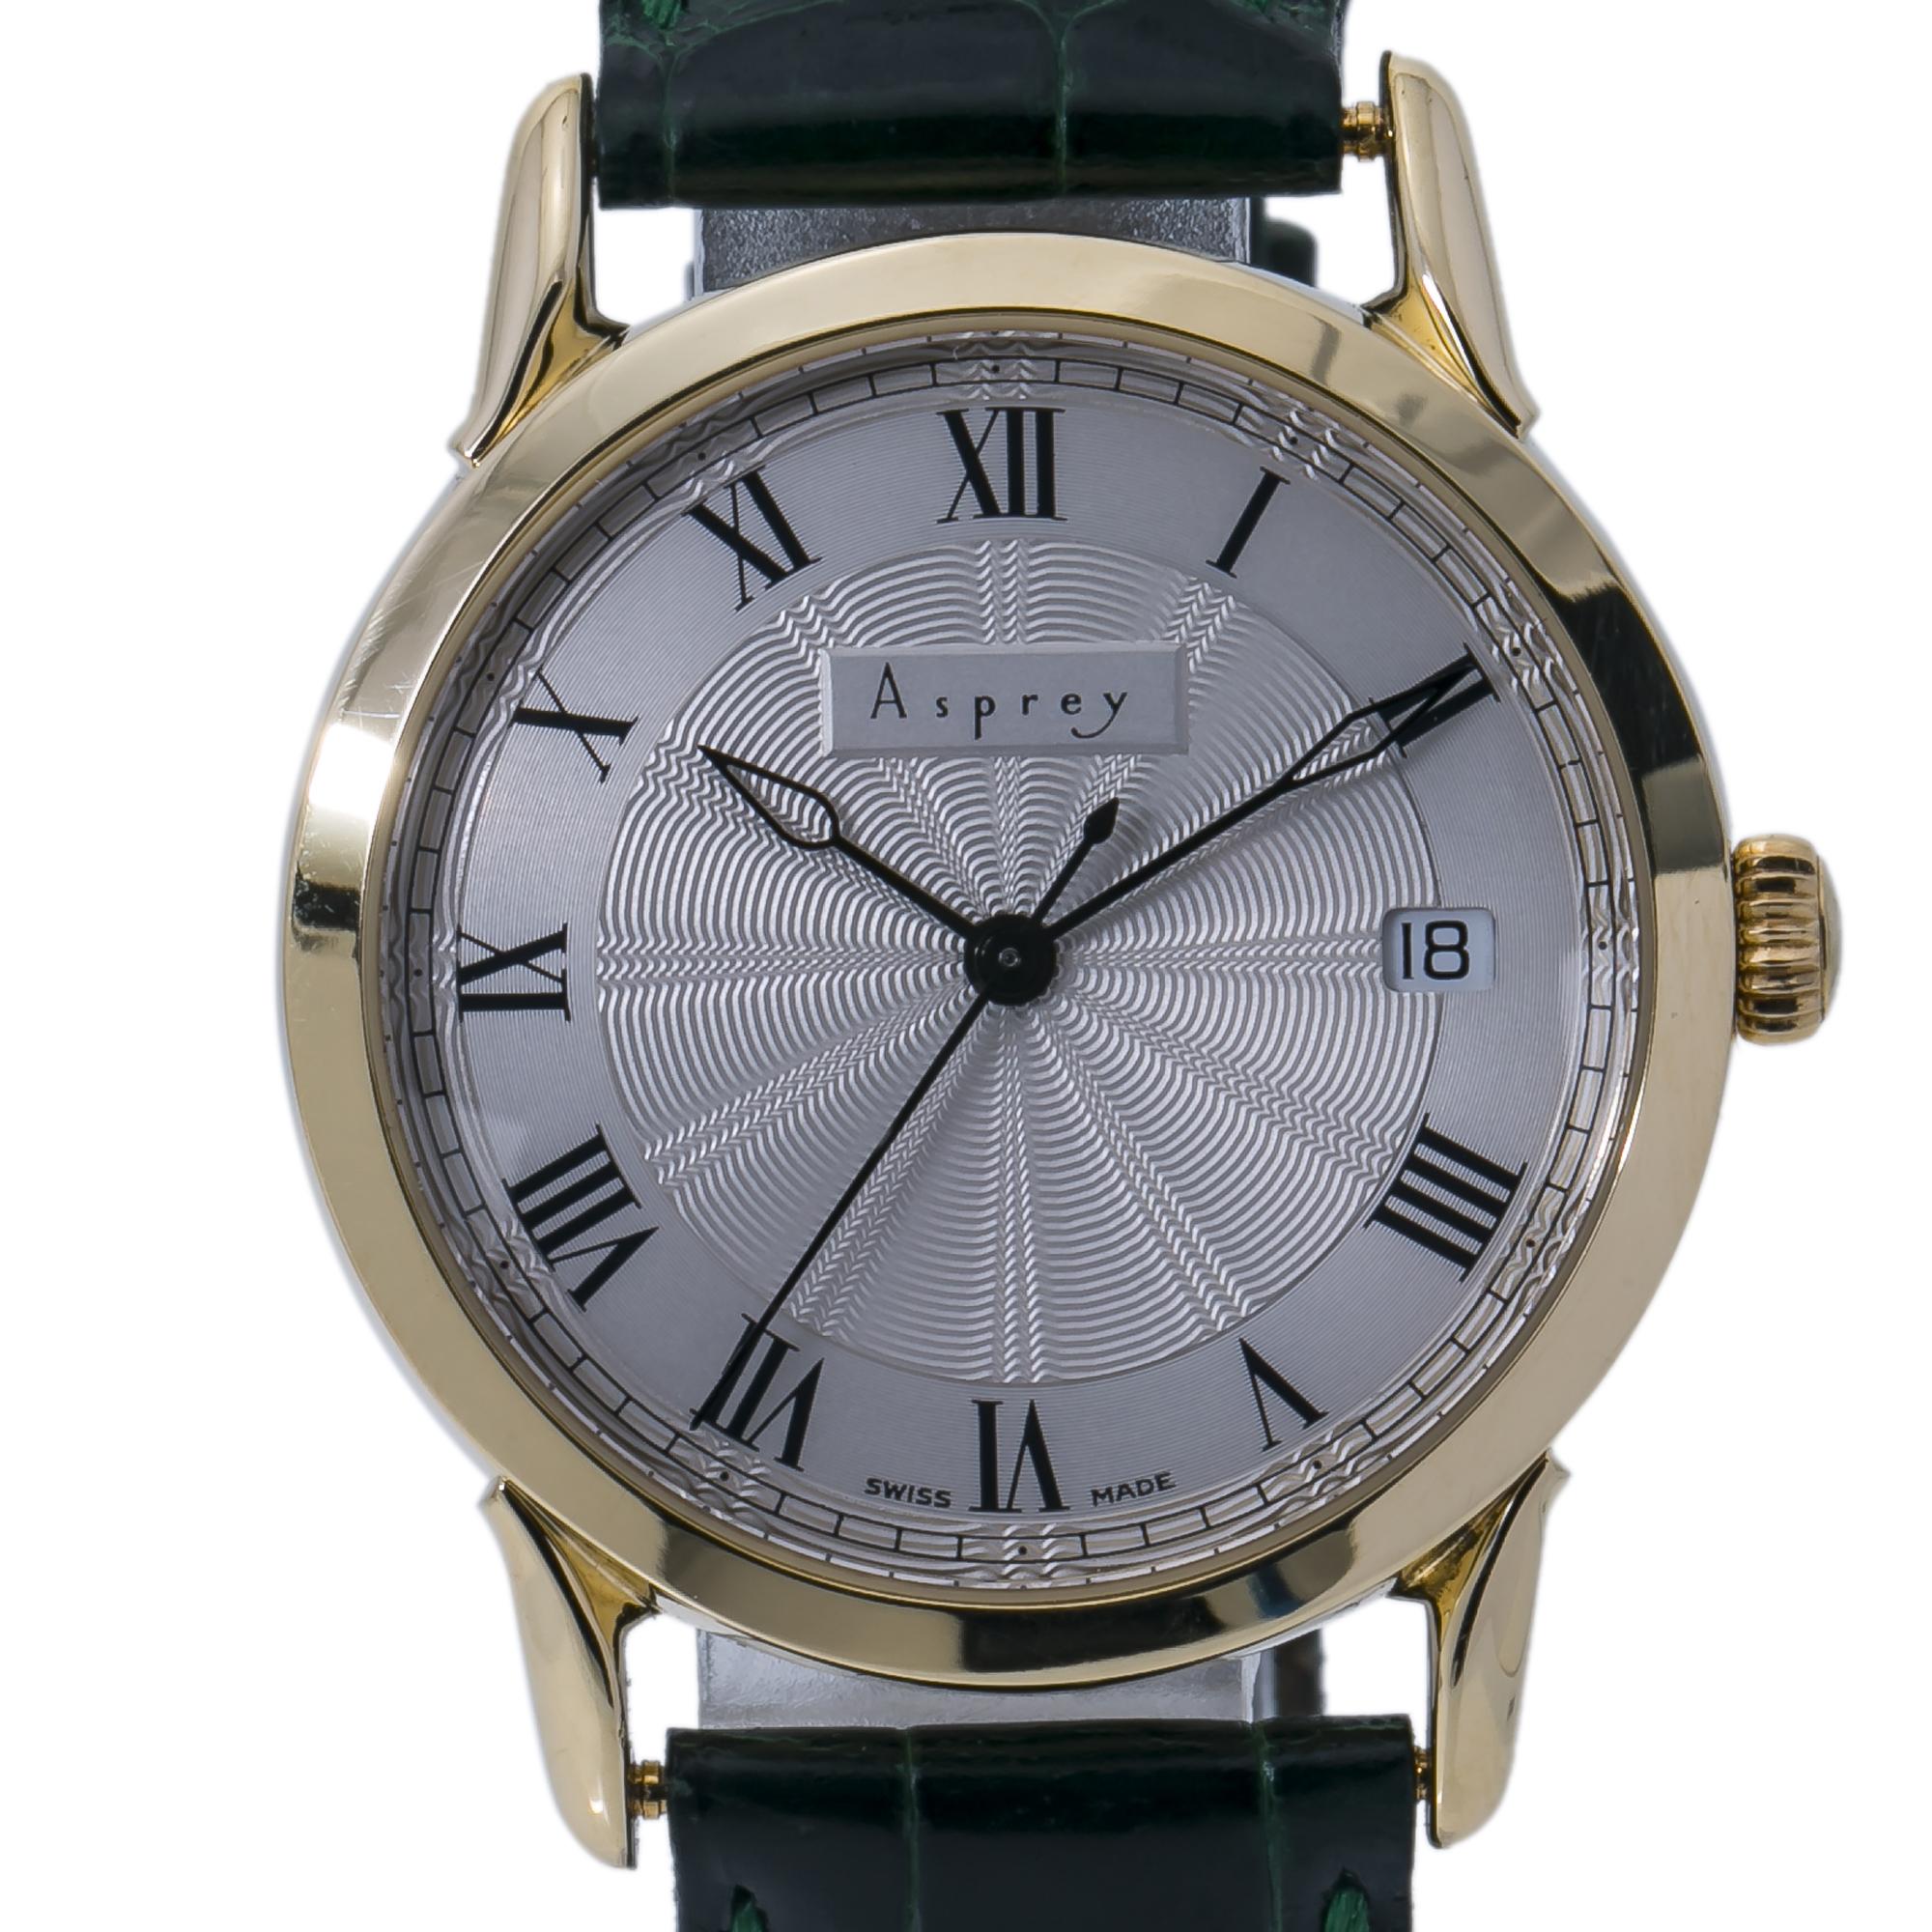 Asprey Vintage Rare Automatic Men's Watch SIlver Opaline Dial 18k YG 35MM